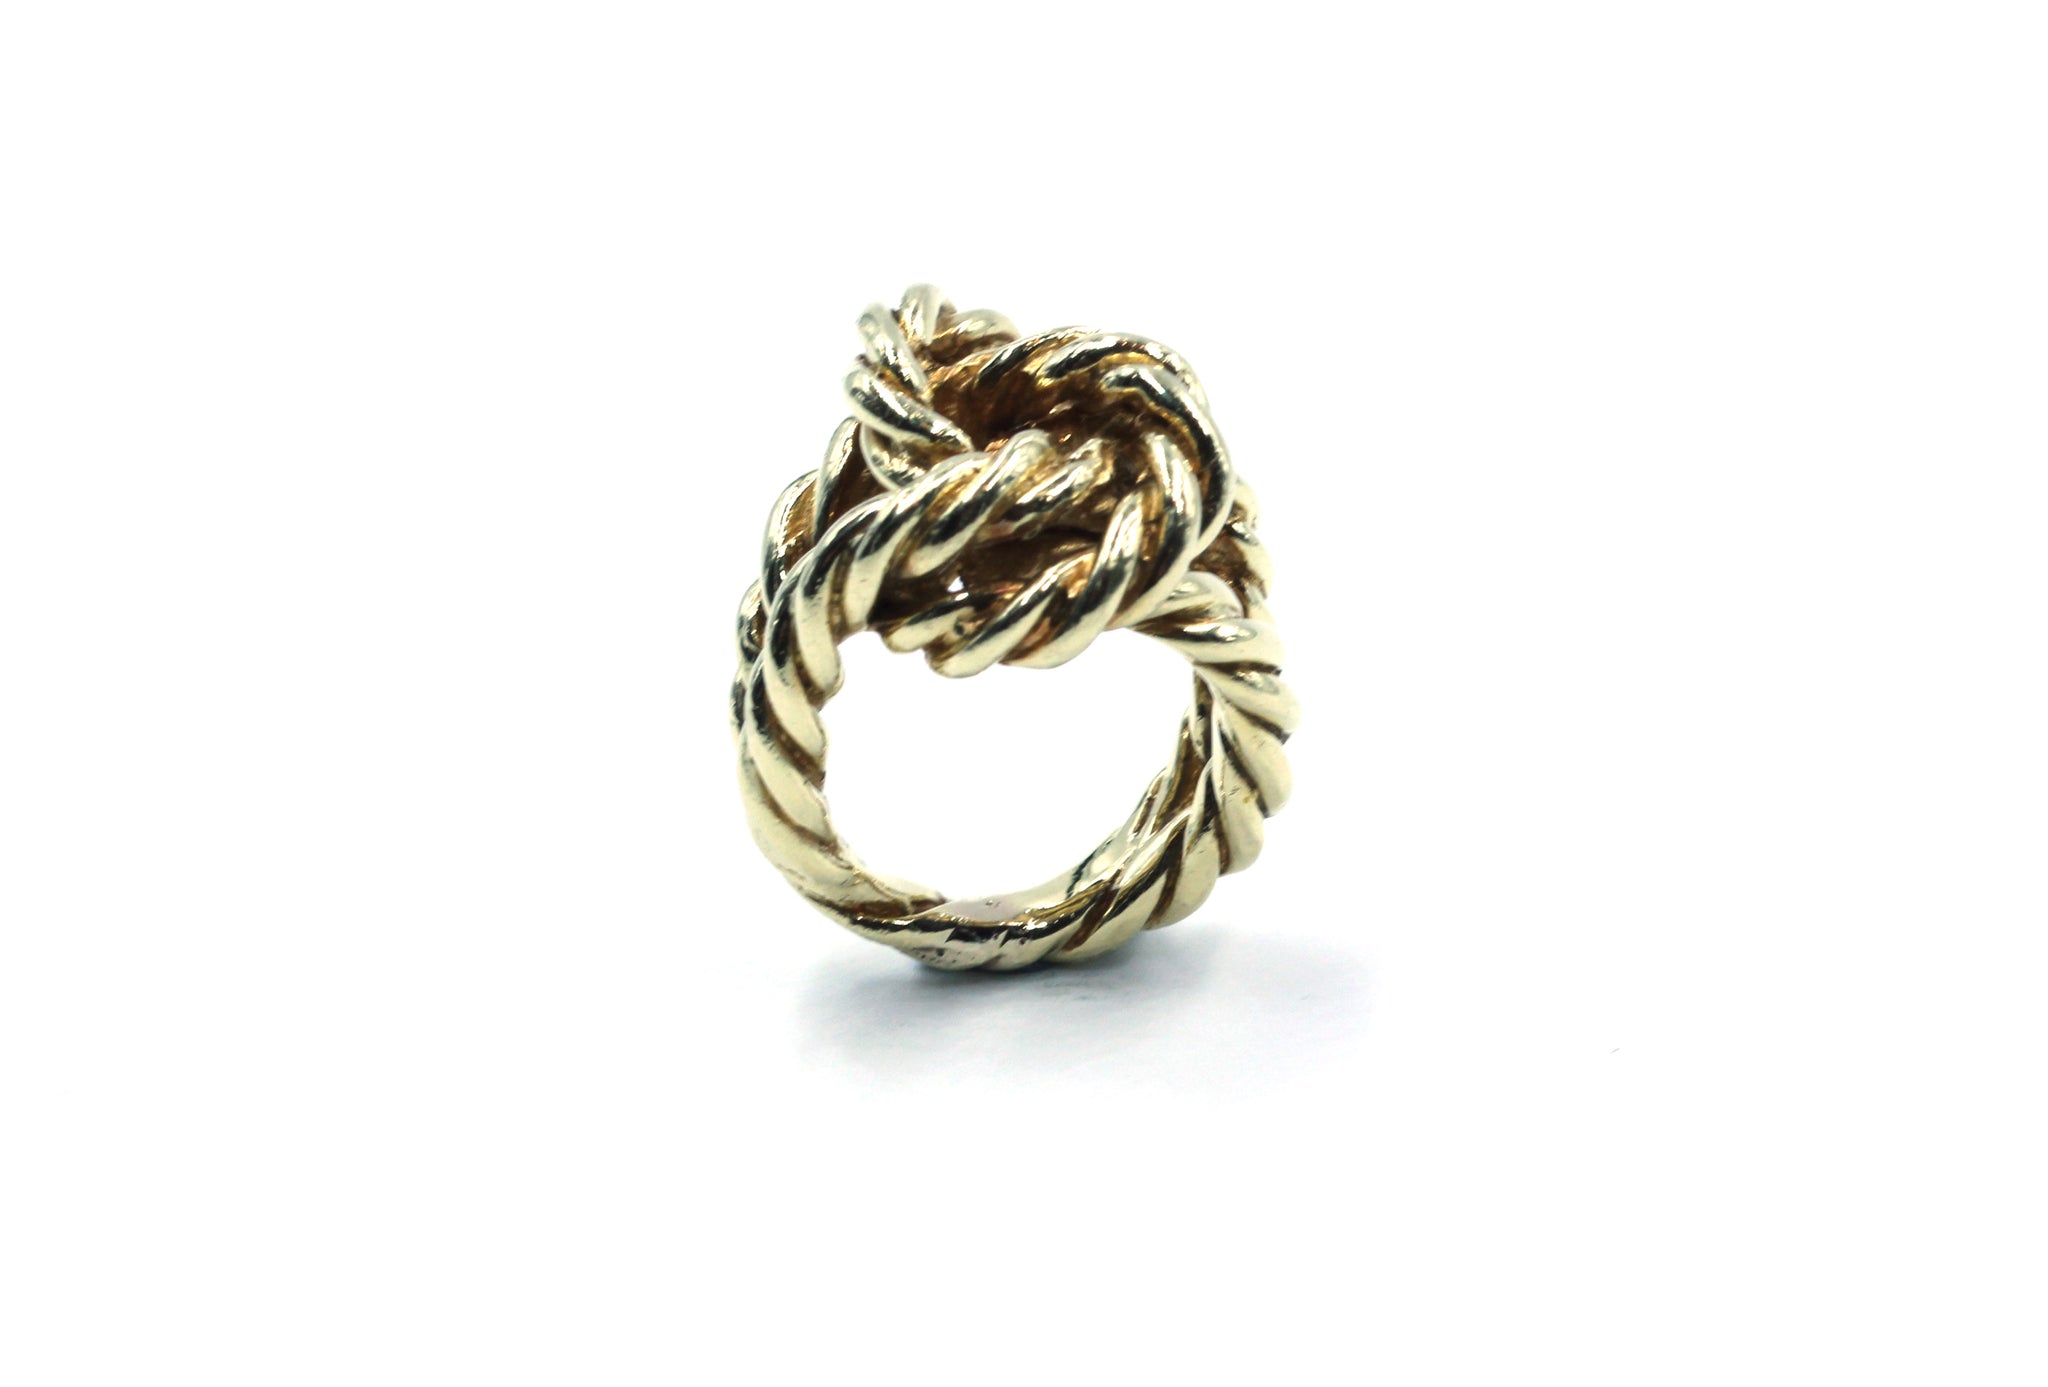 Vintage Gold Knot Ring, SOLD